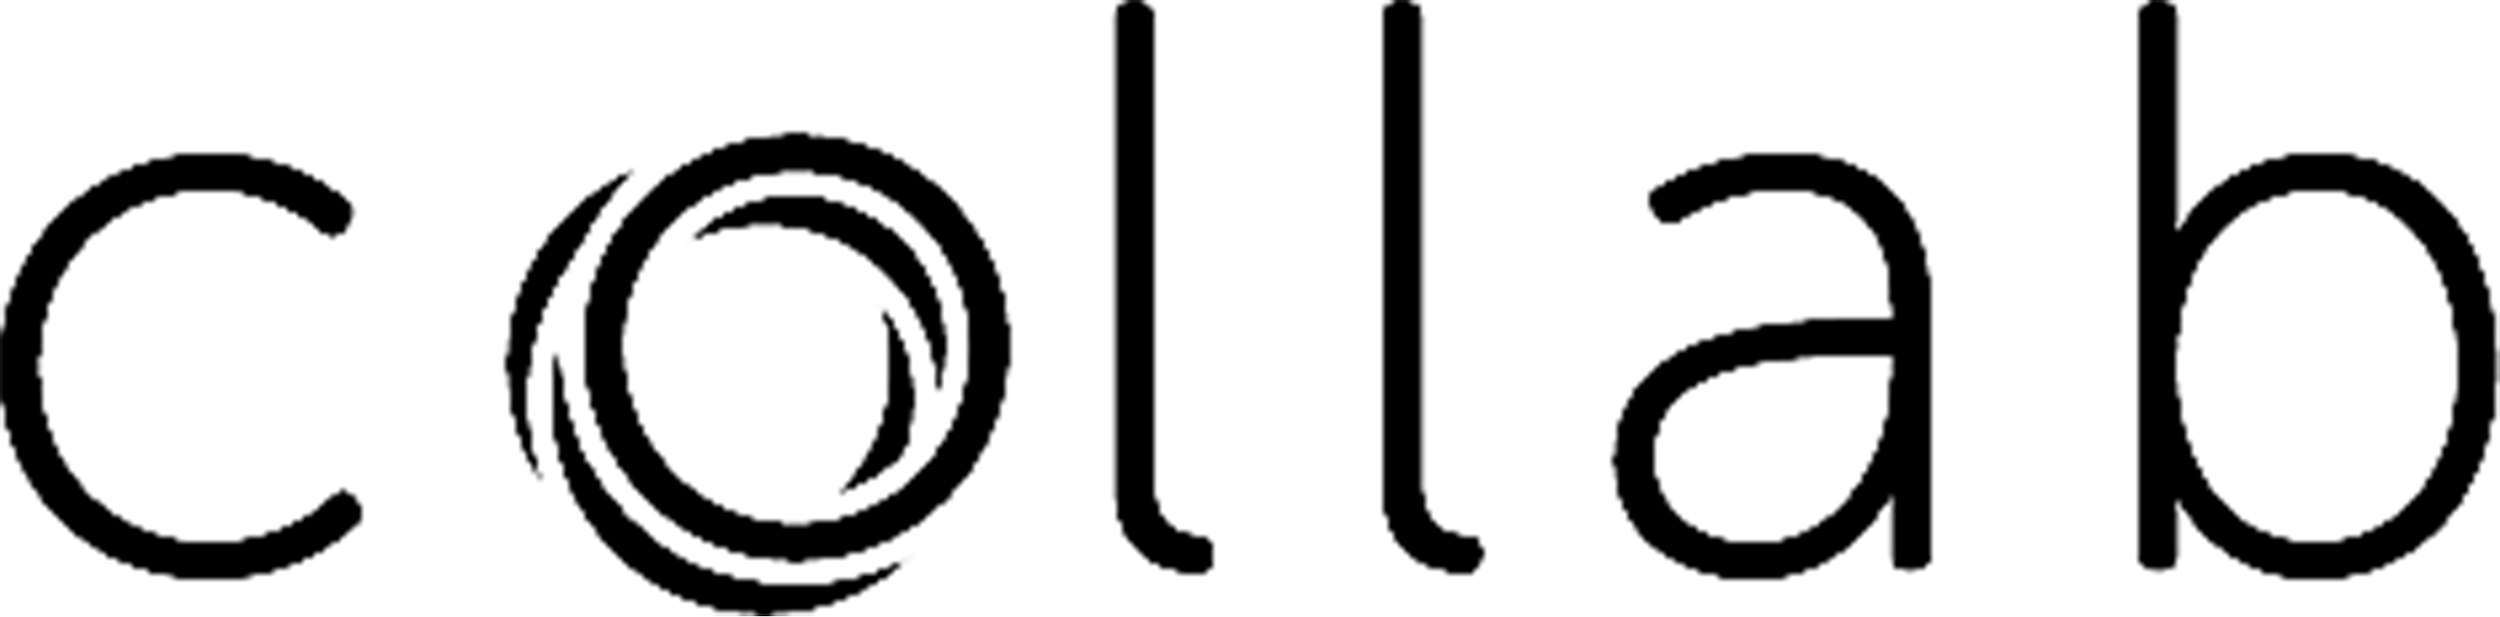 Black Collab Capital Logo.png